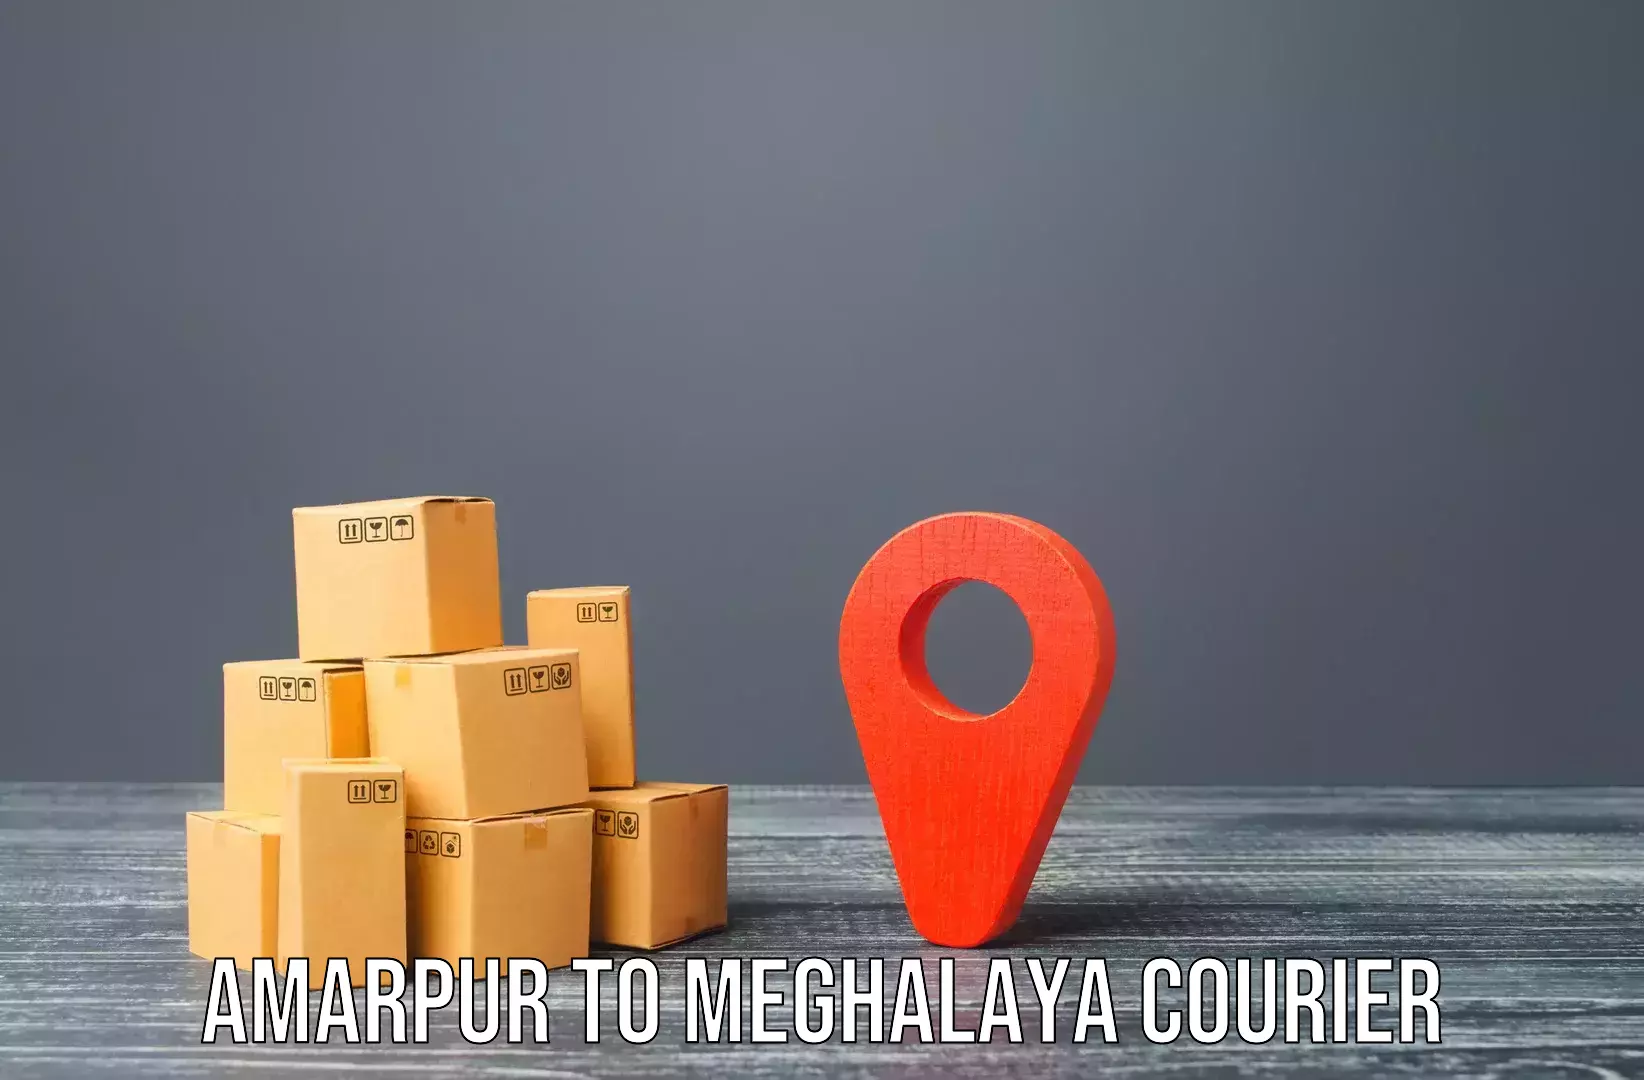 Professional moving company Amarpur to Jowai